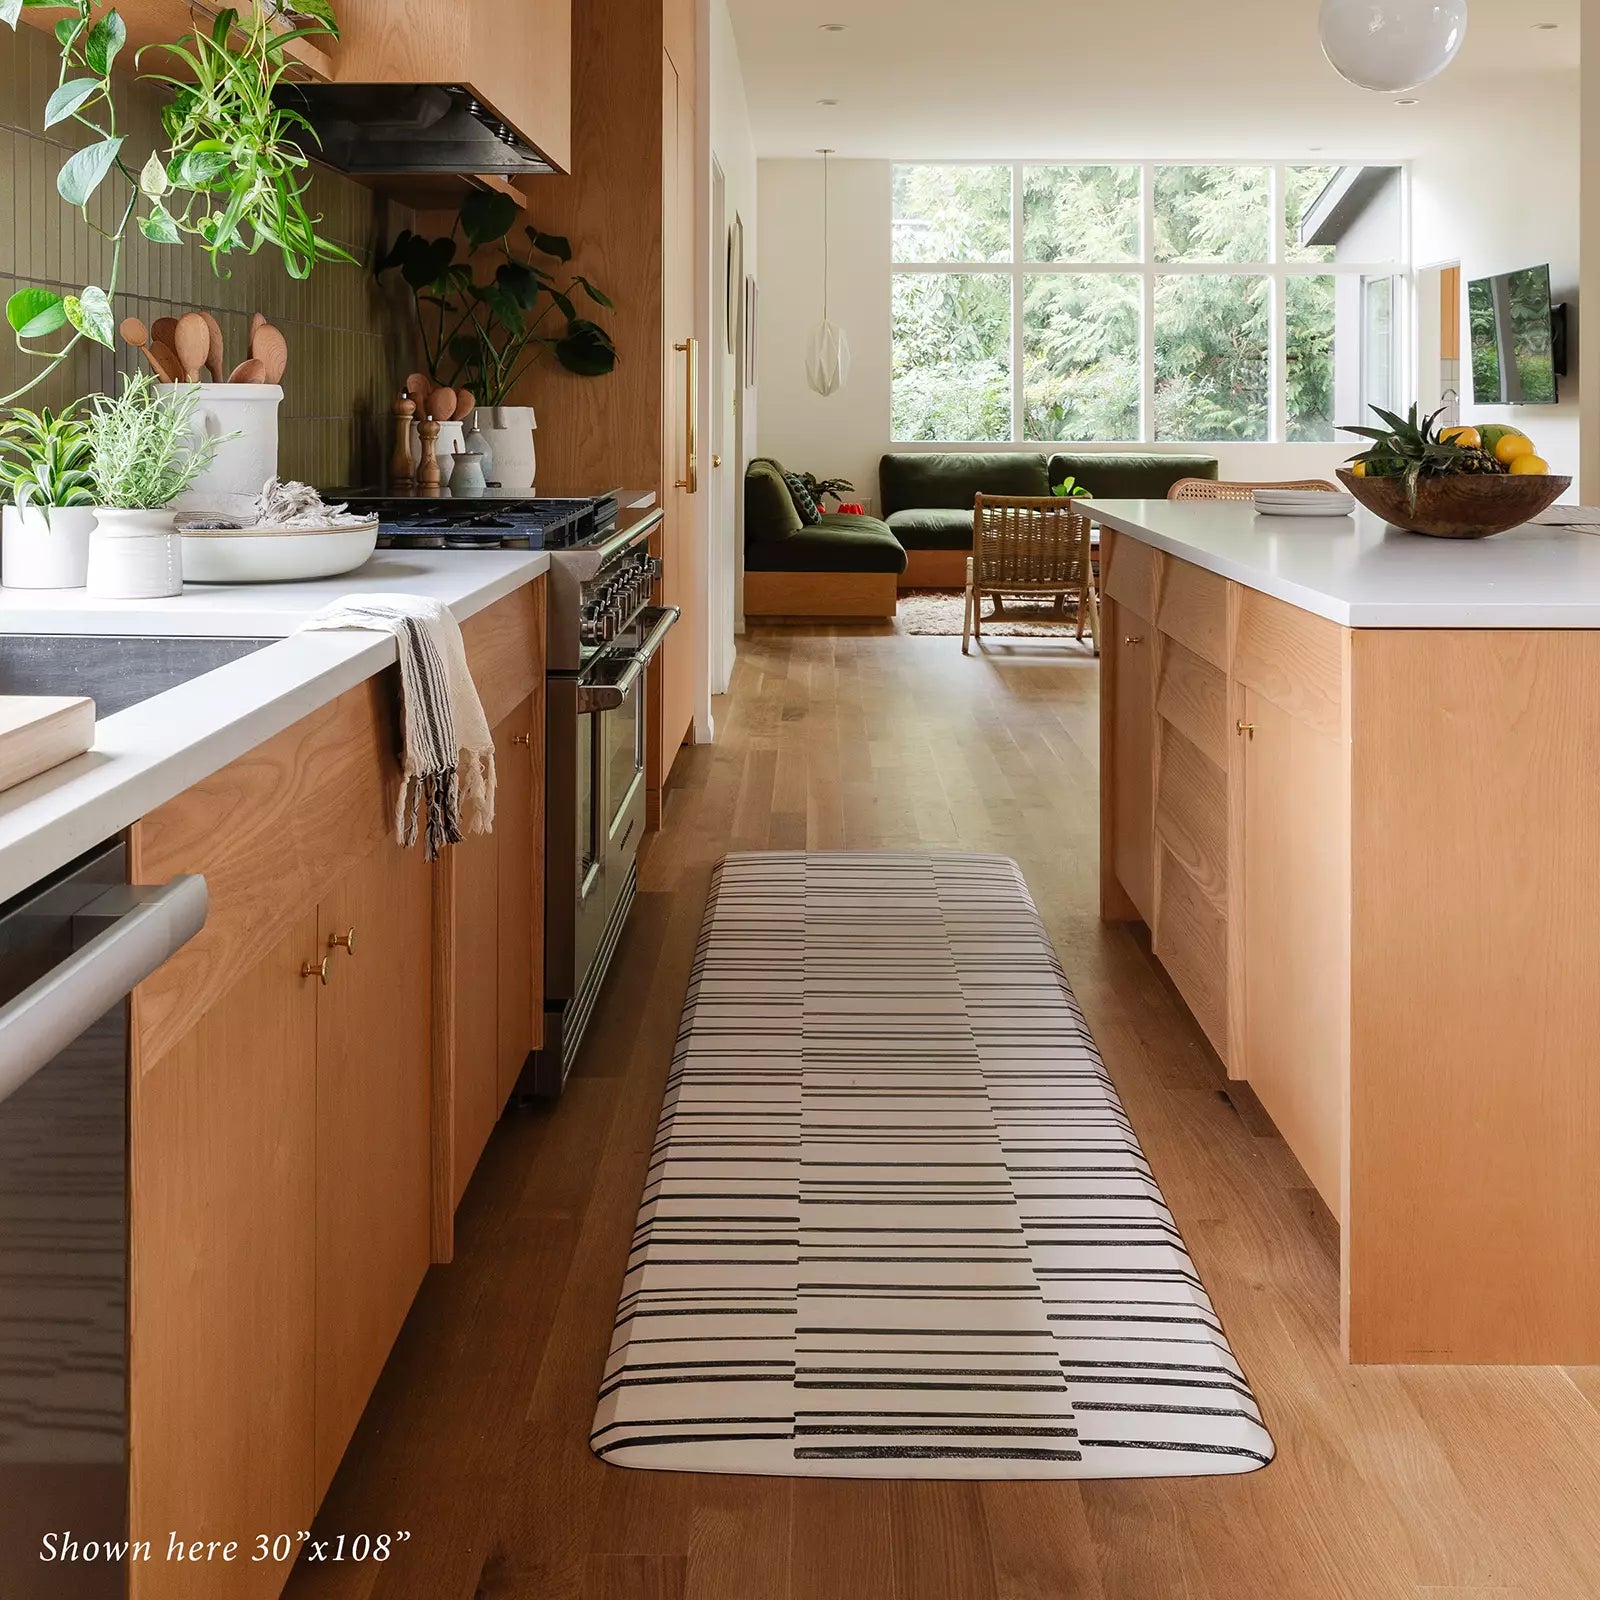 Black and white inverted stripe kitchen mat in size 30x108 in kitchen